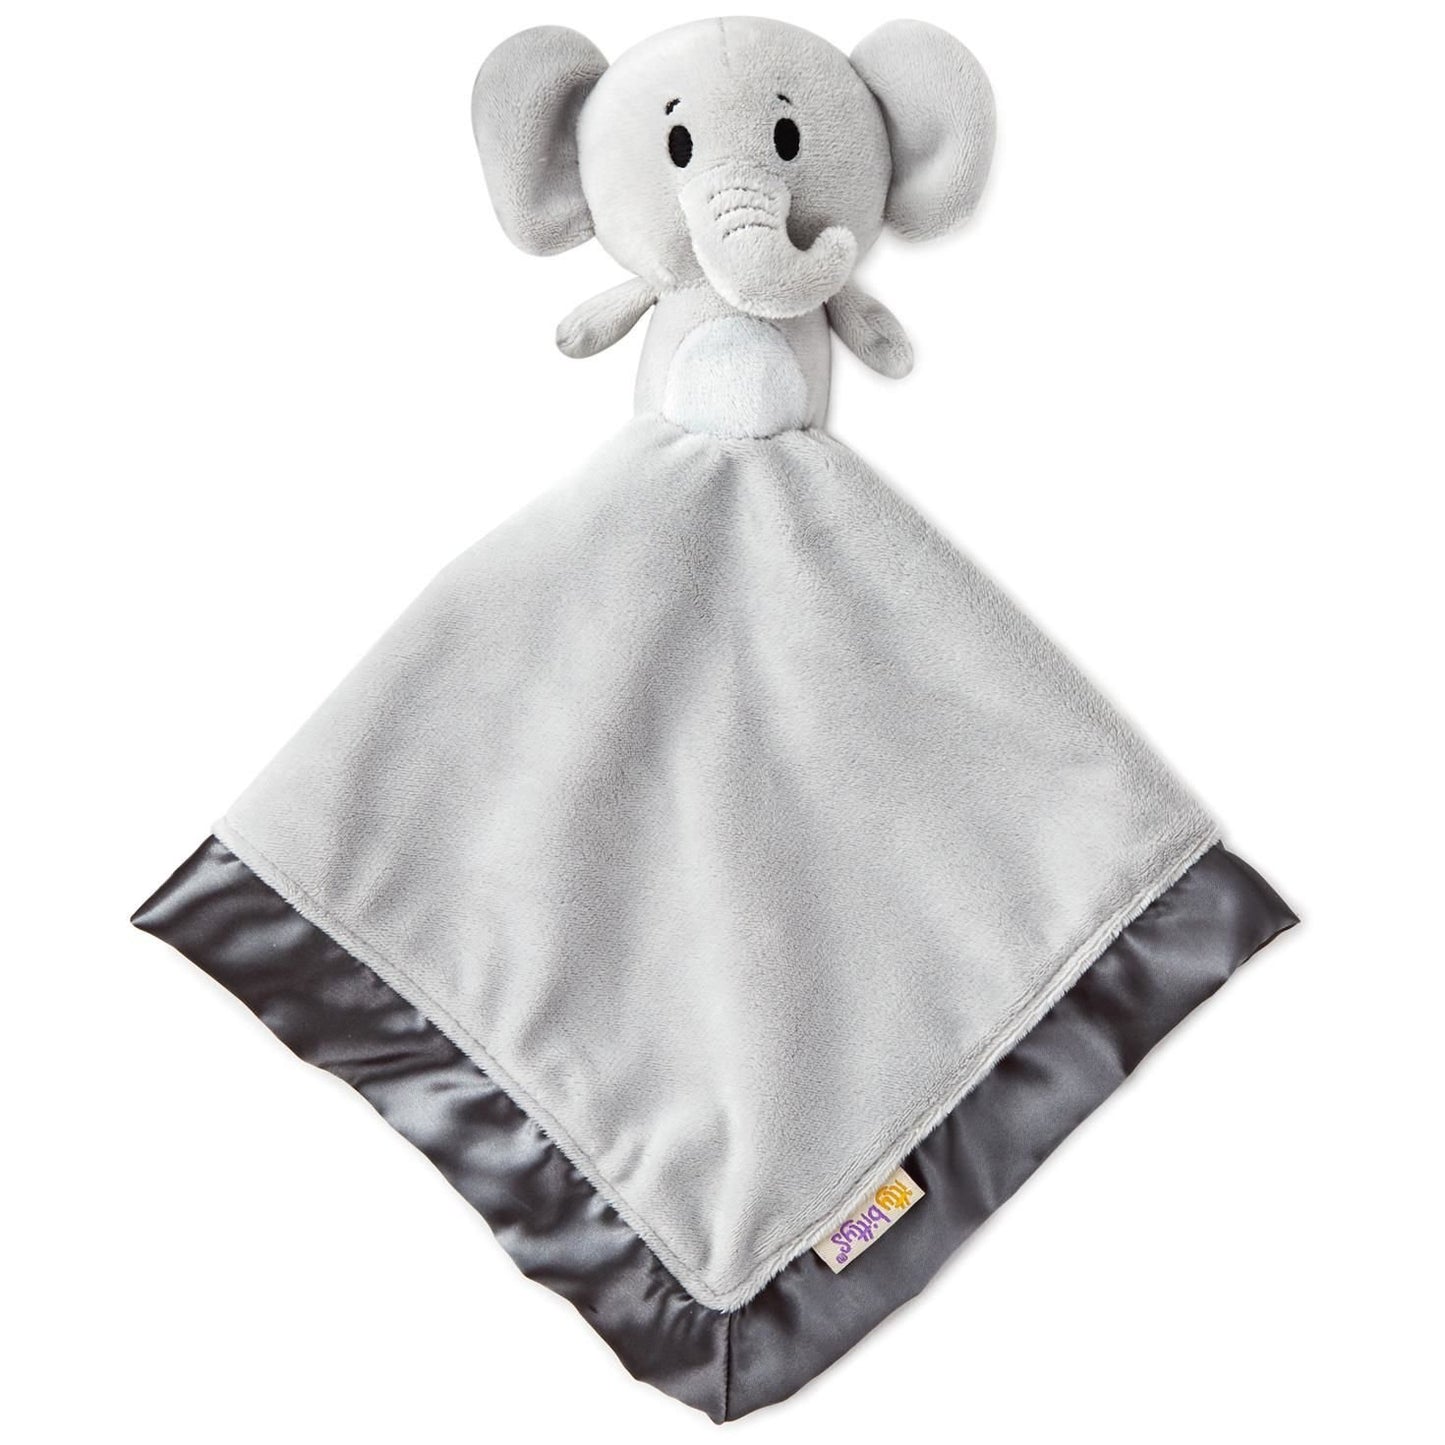 Hallmark Easter Itty Bitty Stuffed Animal Plush Blanket, Baby Toys Toddler Toys, Noah's Ark Elephant Baby Lovey